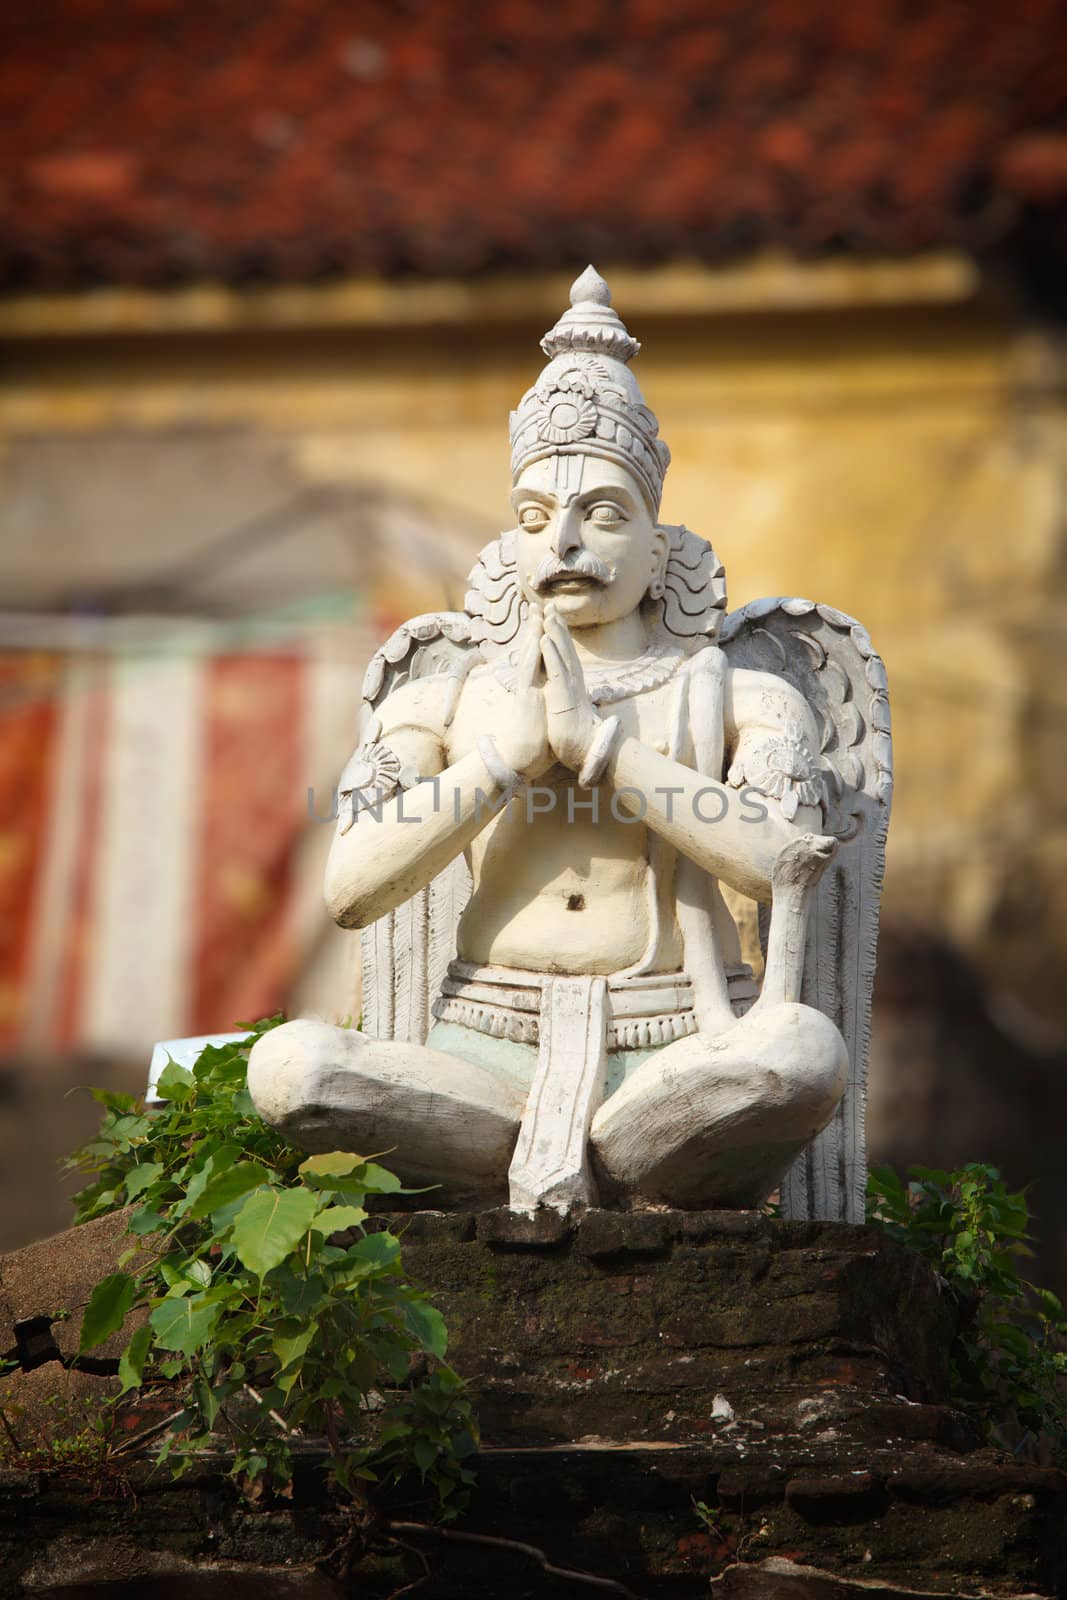 Stone Garuda (bird deity) statue